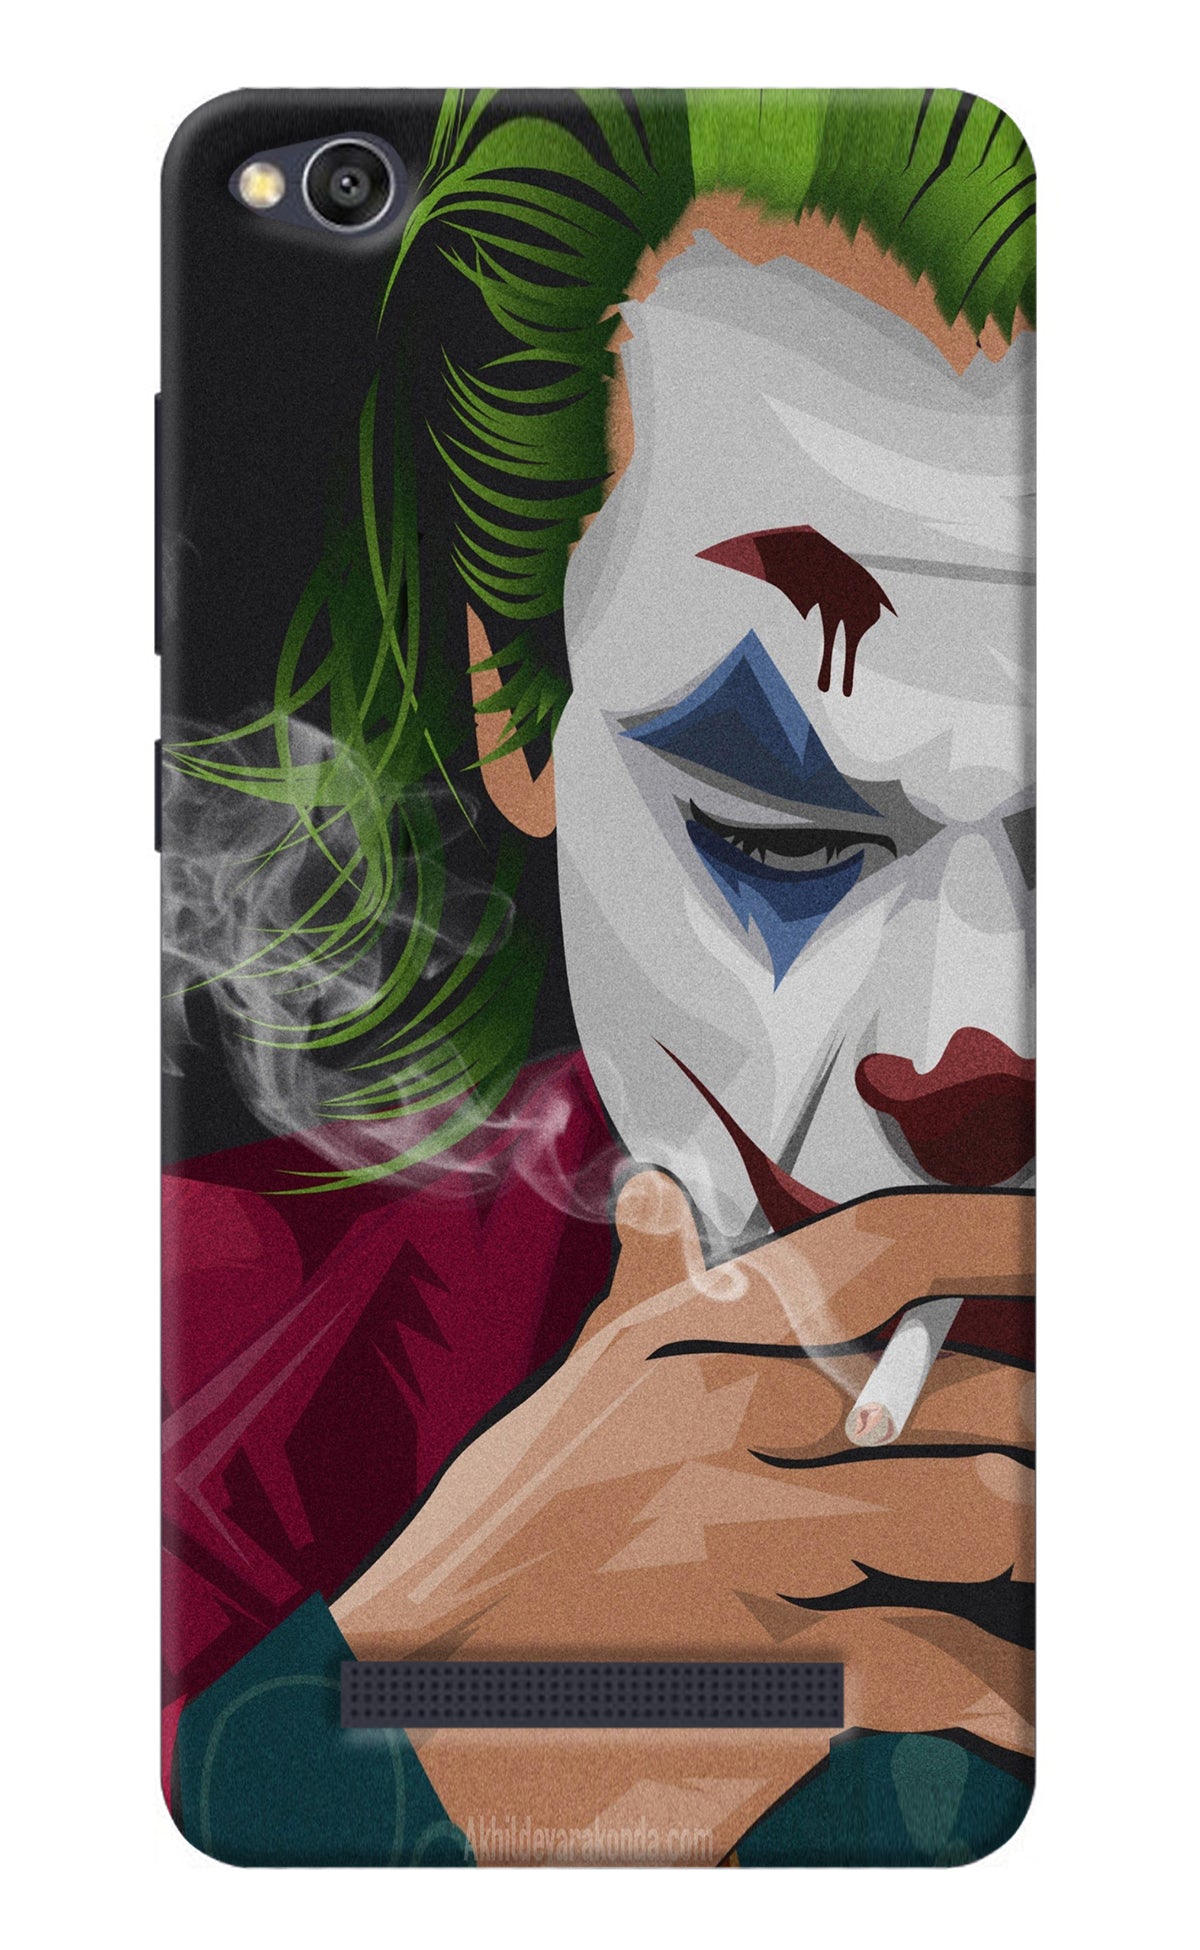 Joker Smoking Redmi 4A Back Cover